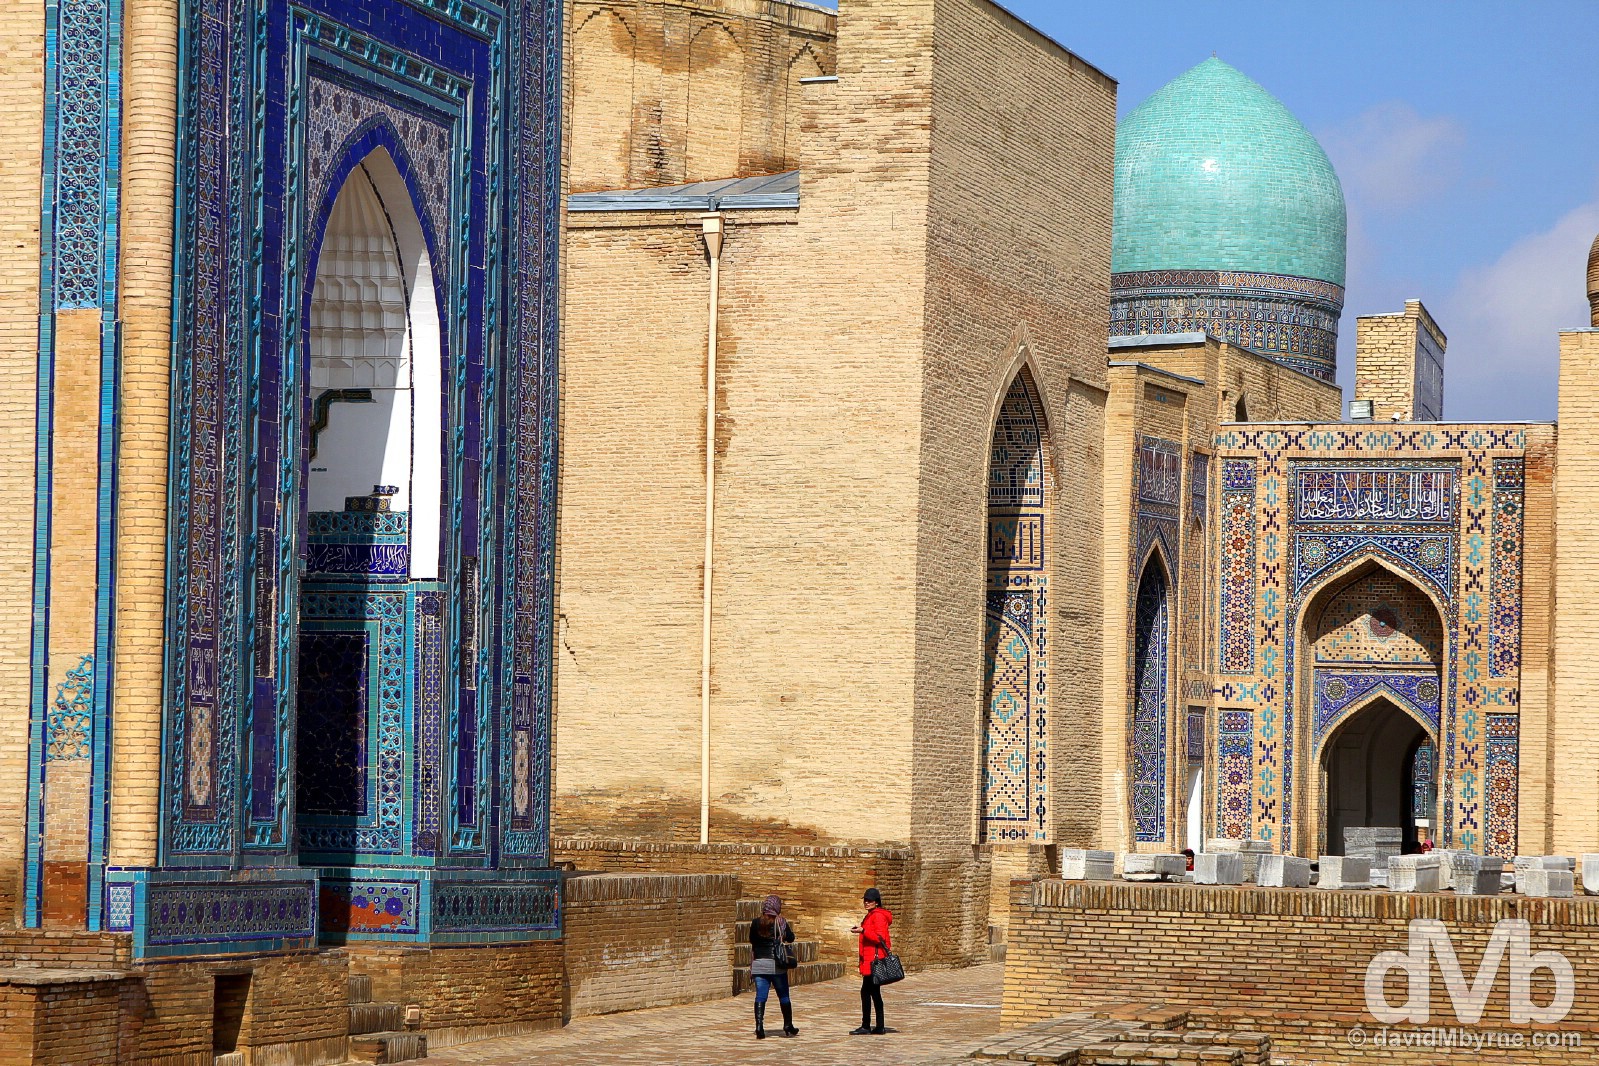 Shah-i-Zinda, the Avenue of Mausoleums, in Samarkand, Uzbekistan. March 8, 2015. 